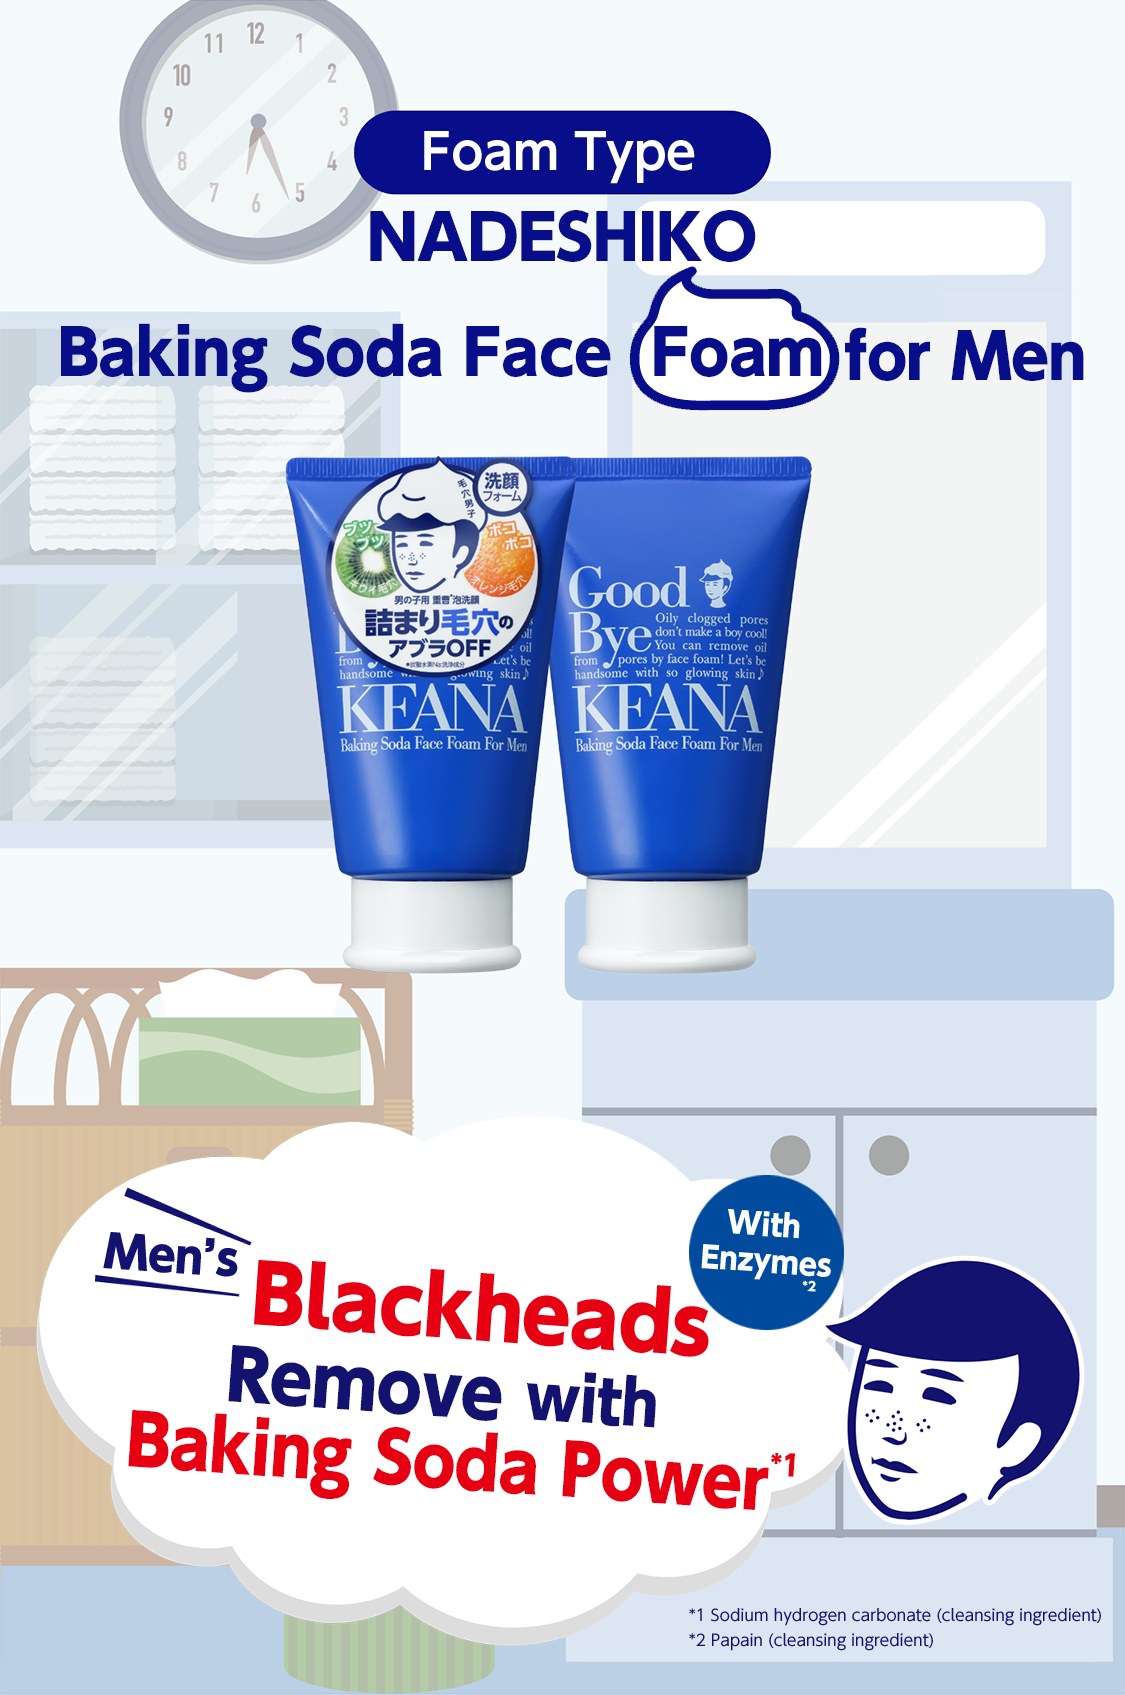 NADESHIKO Baking Soda Face Foam for Men